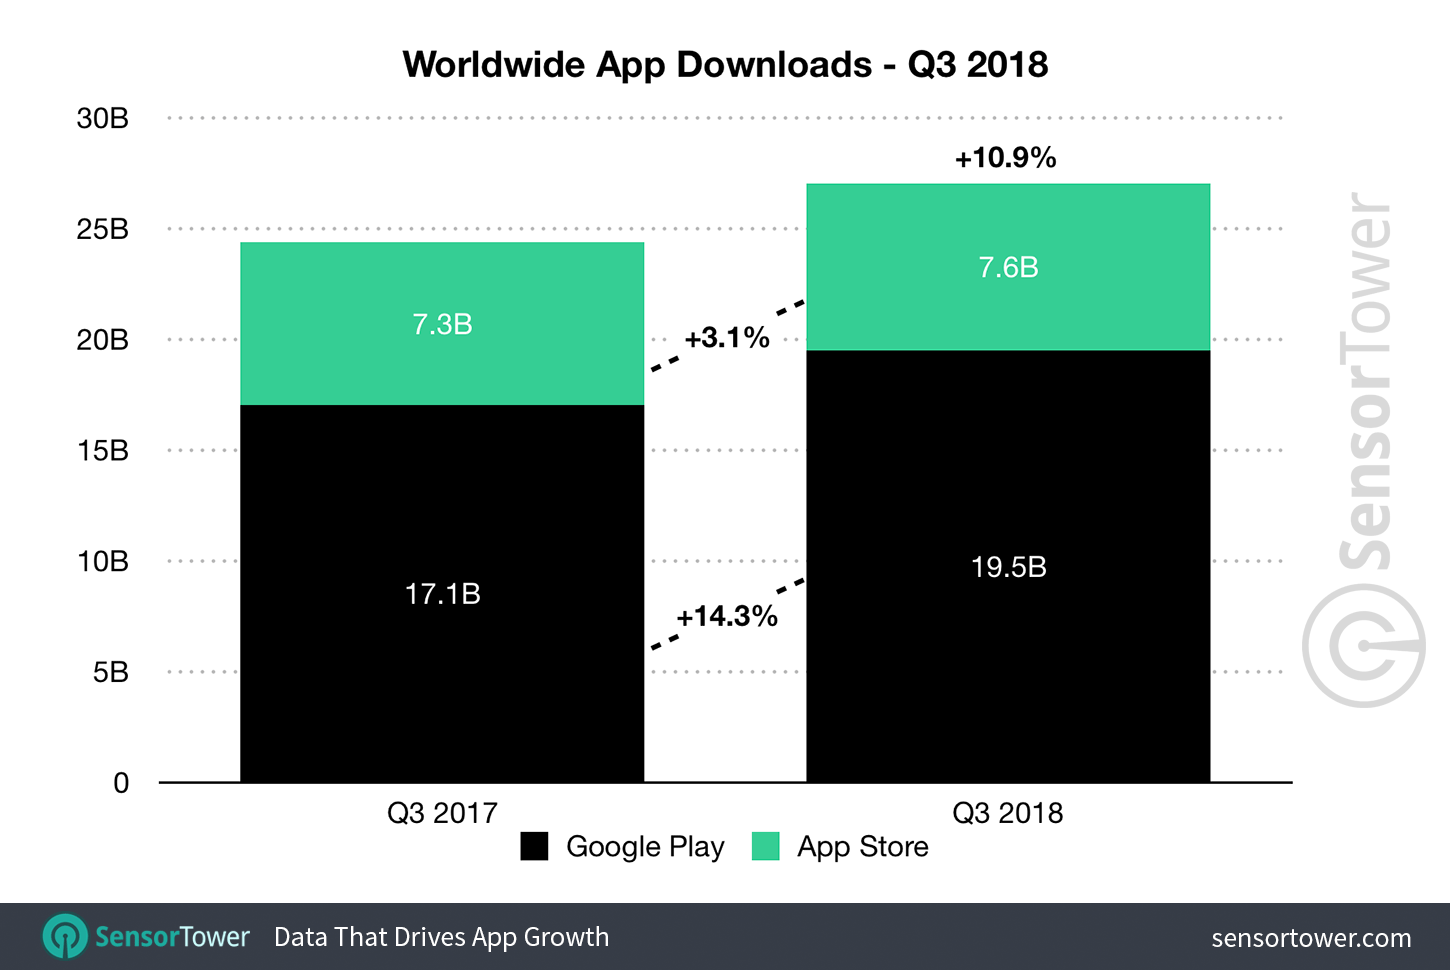 q3-2018-app-downloads-worldwide